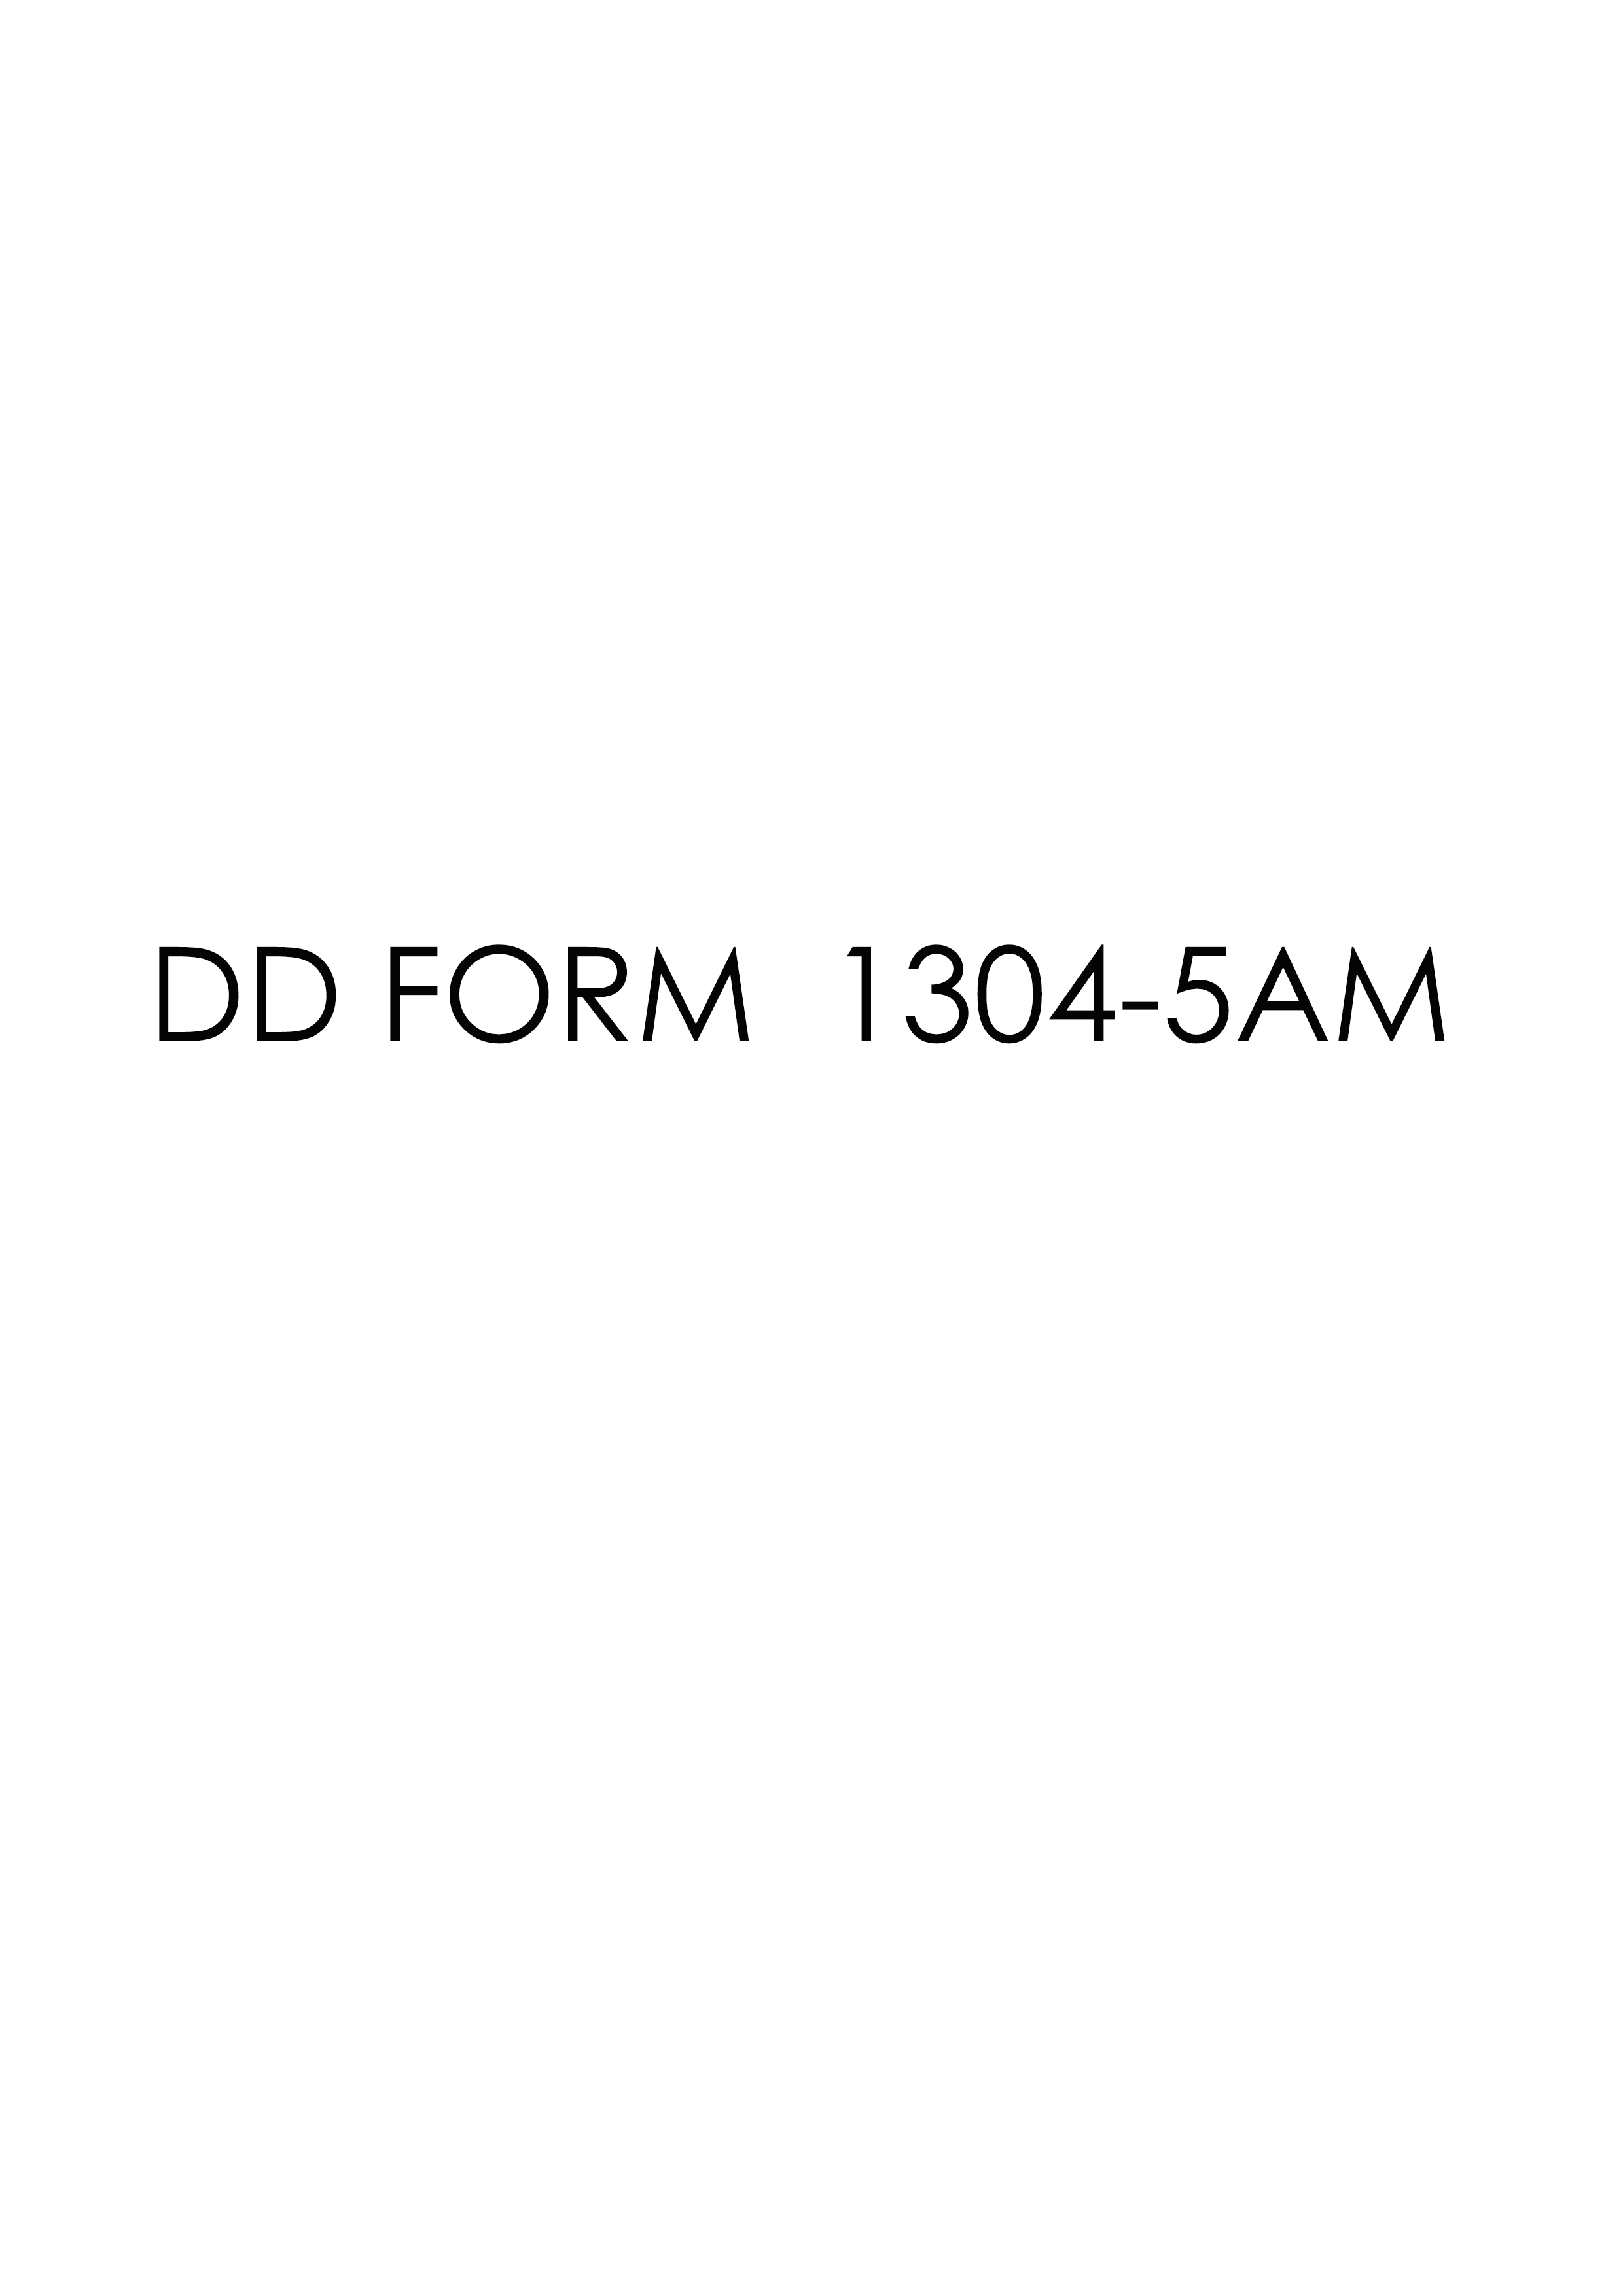 dd Form 1304-5AM fillable